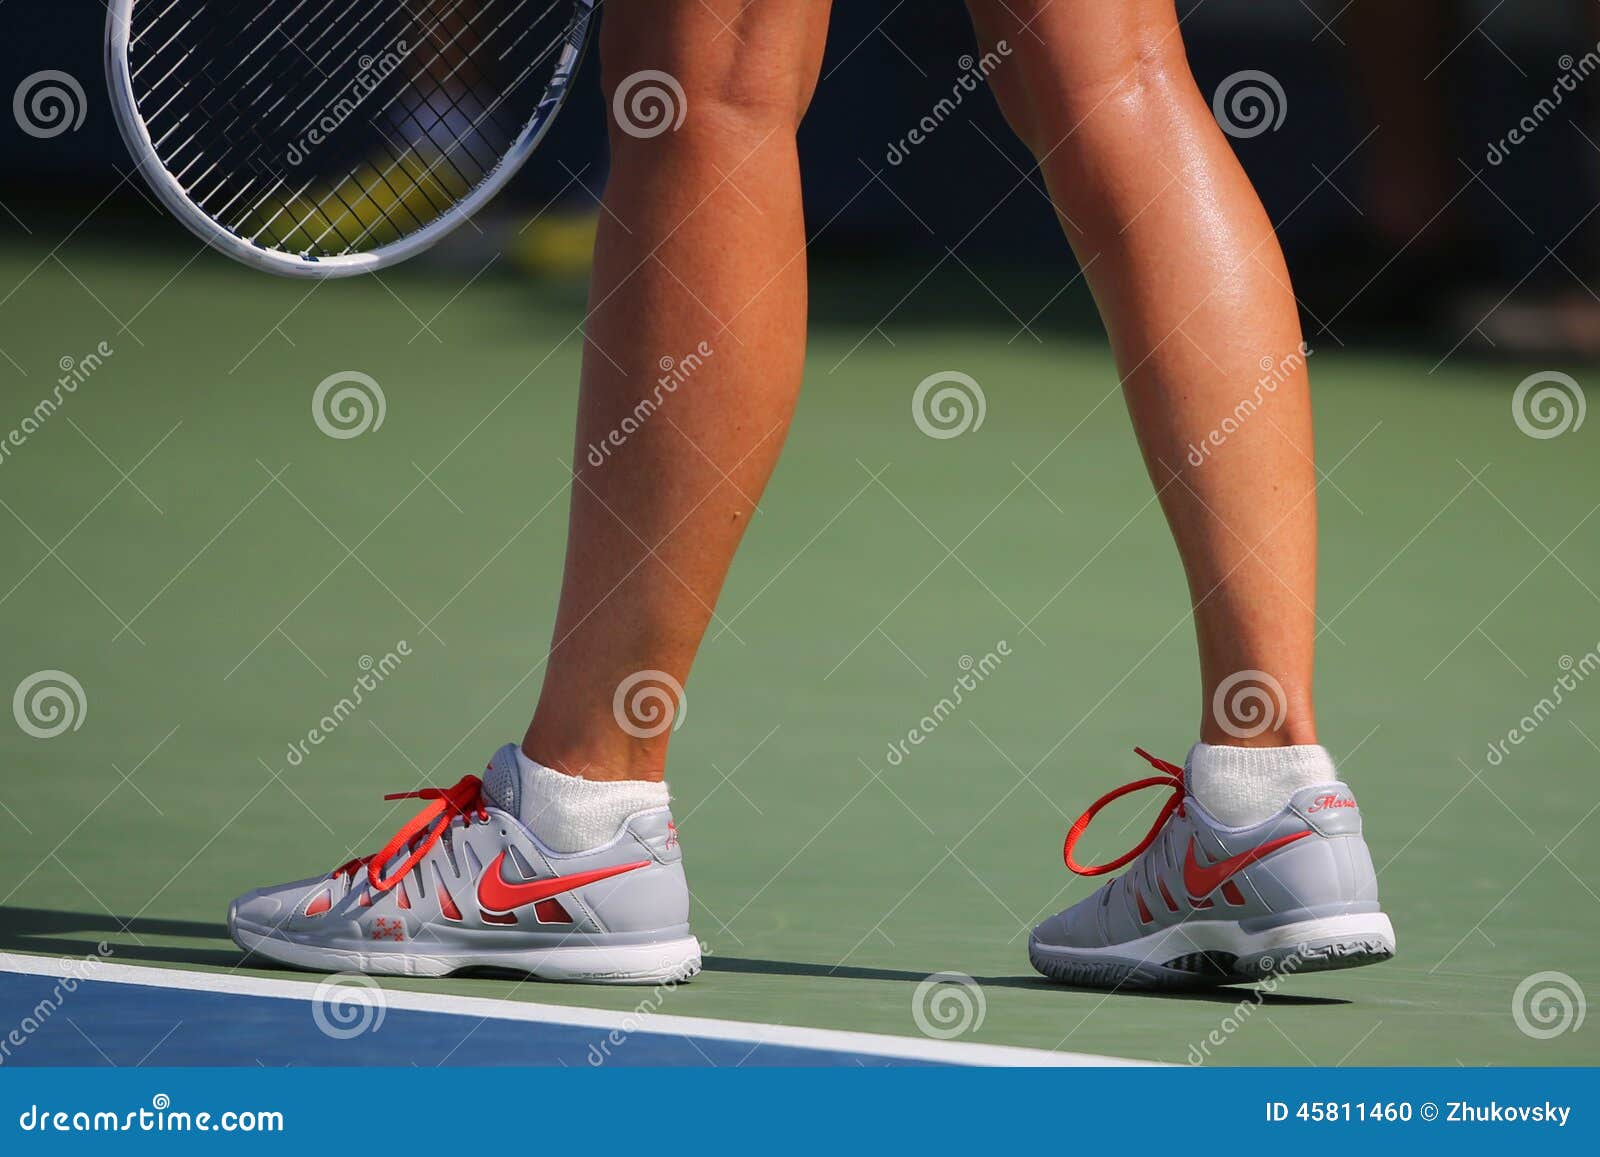 maria sharapova tennis shoes